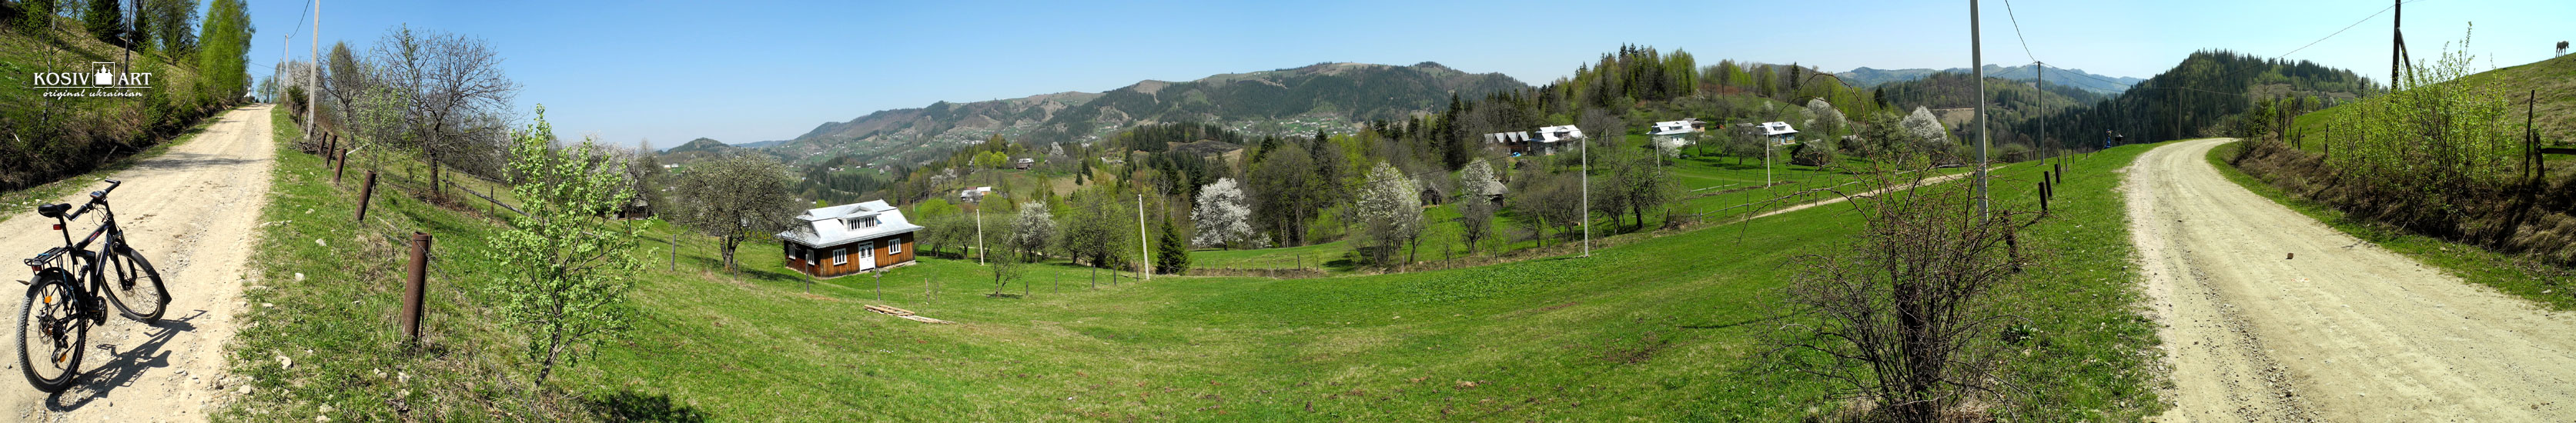 Richka village on spring